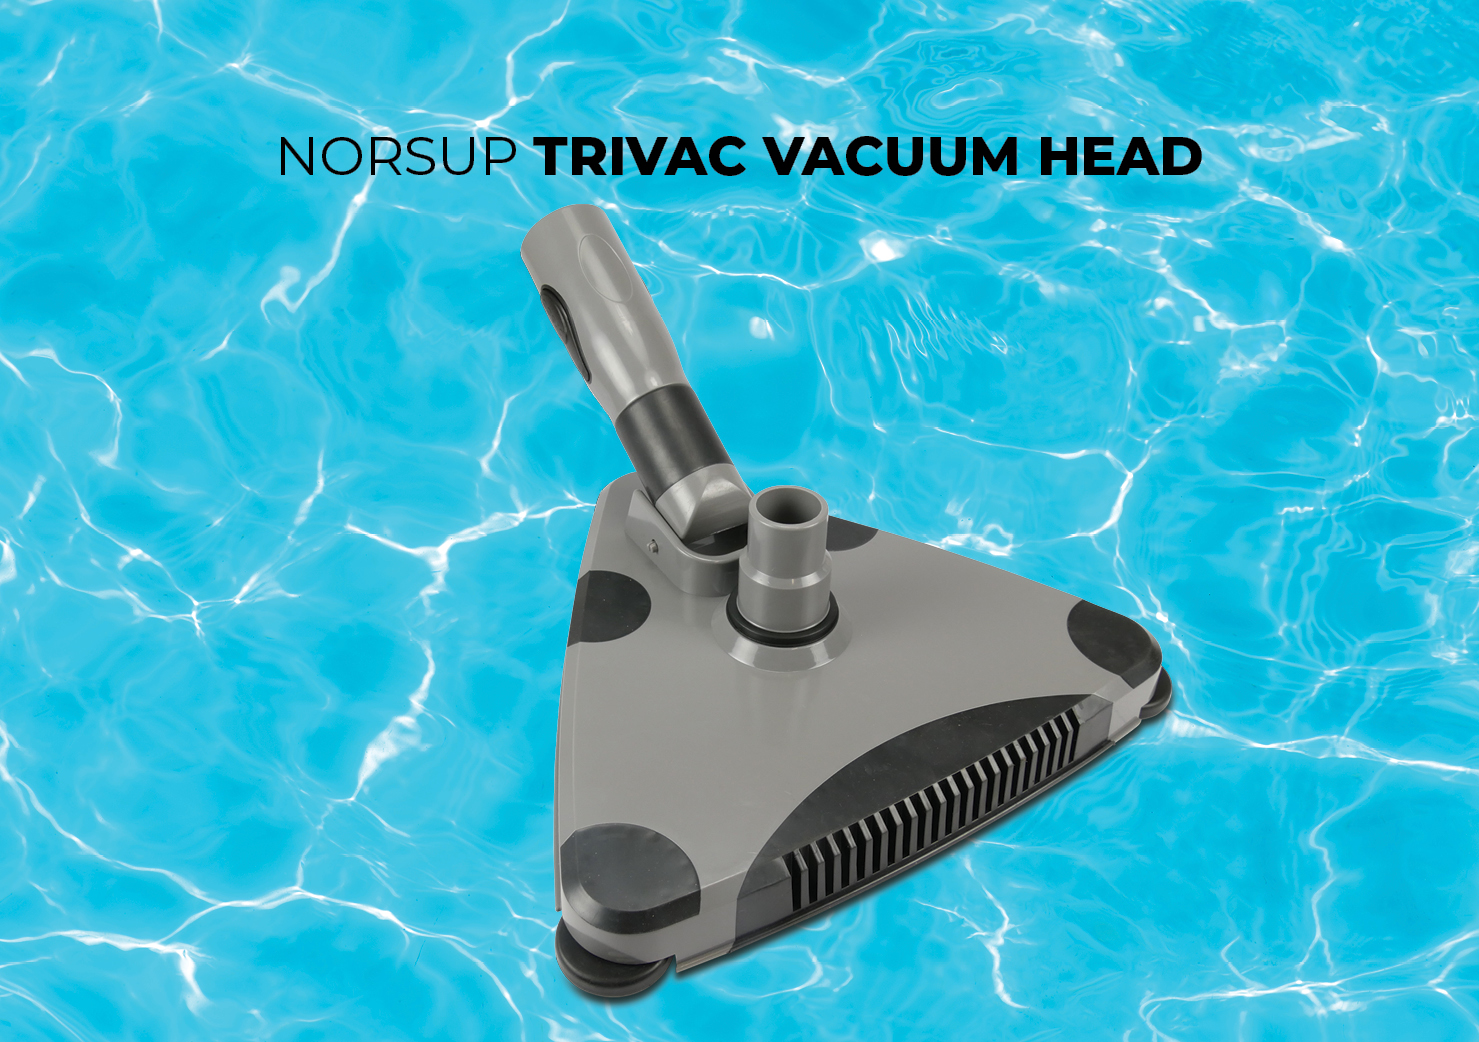 Norsup trivac vacuum head